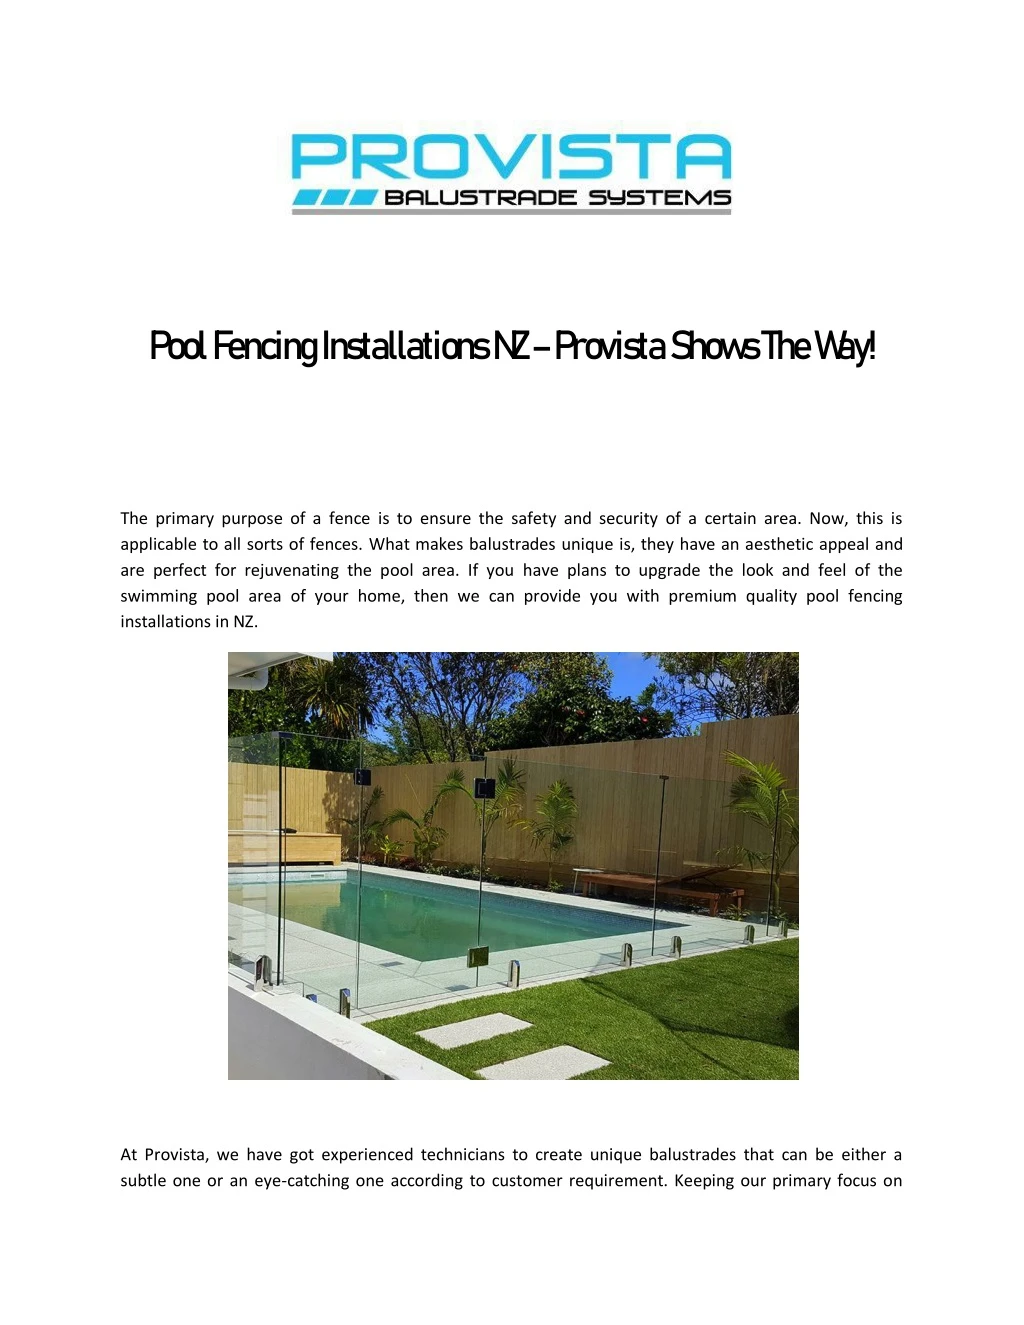 pool fencing installations n z provista show